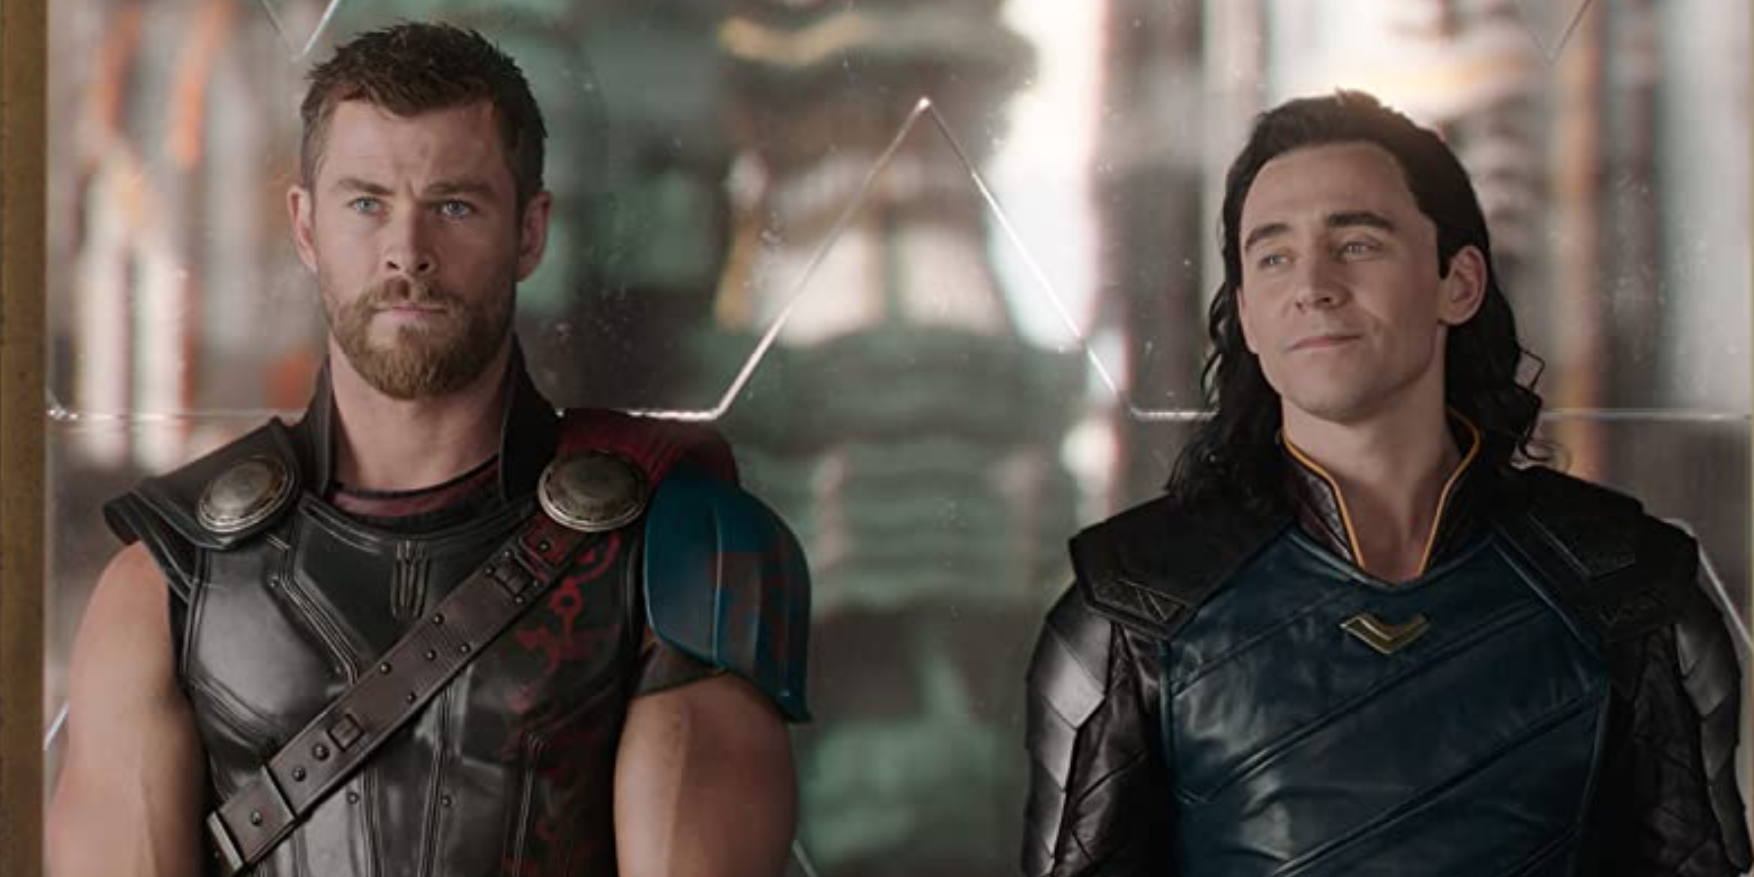 Chris Hemsworth as Thor and Tom Hiddleston as Loki in Thor: Ragnarok